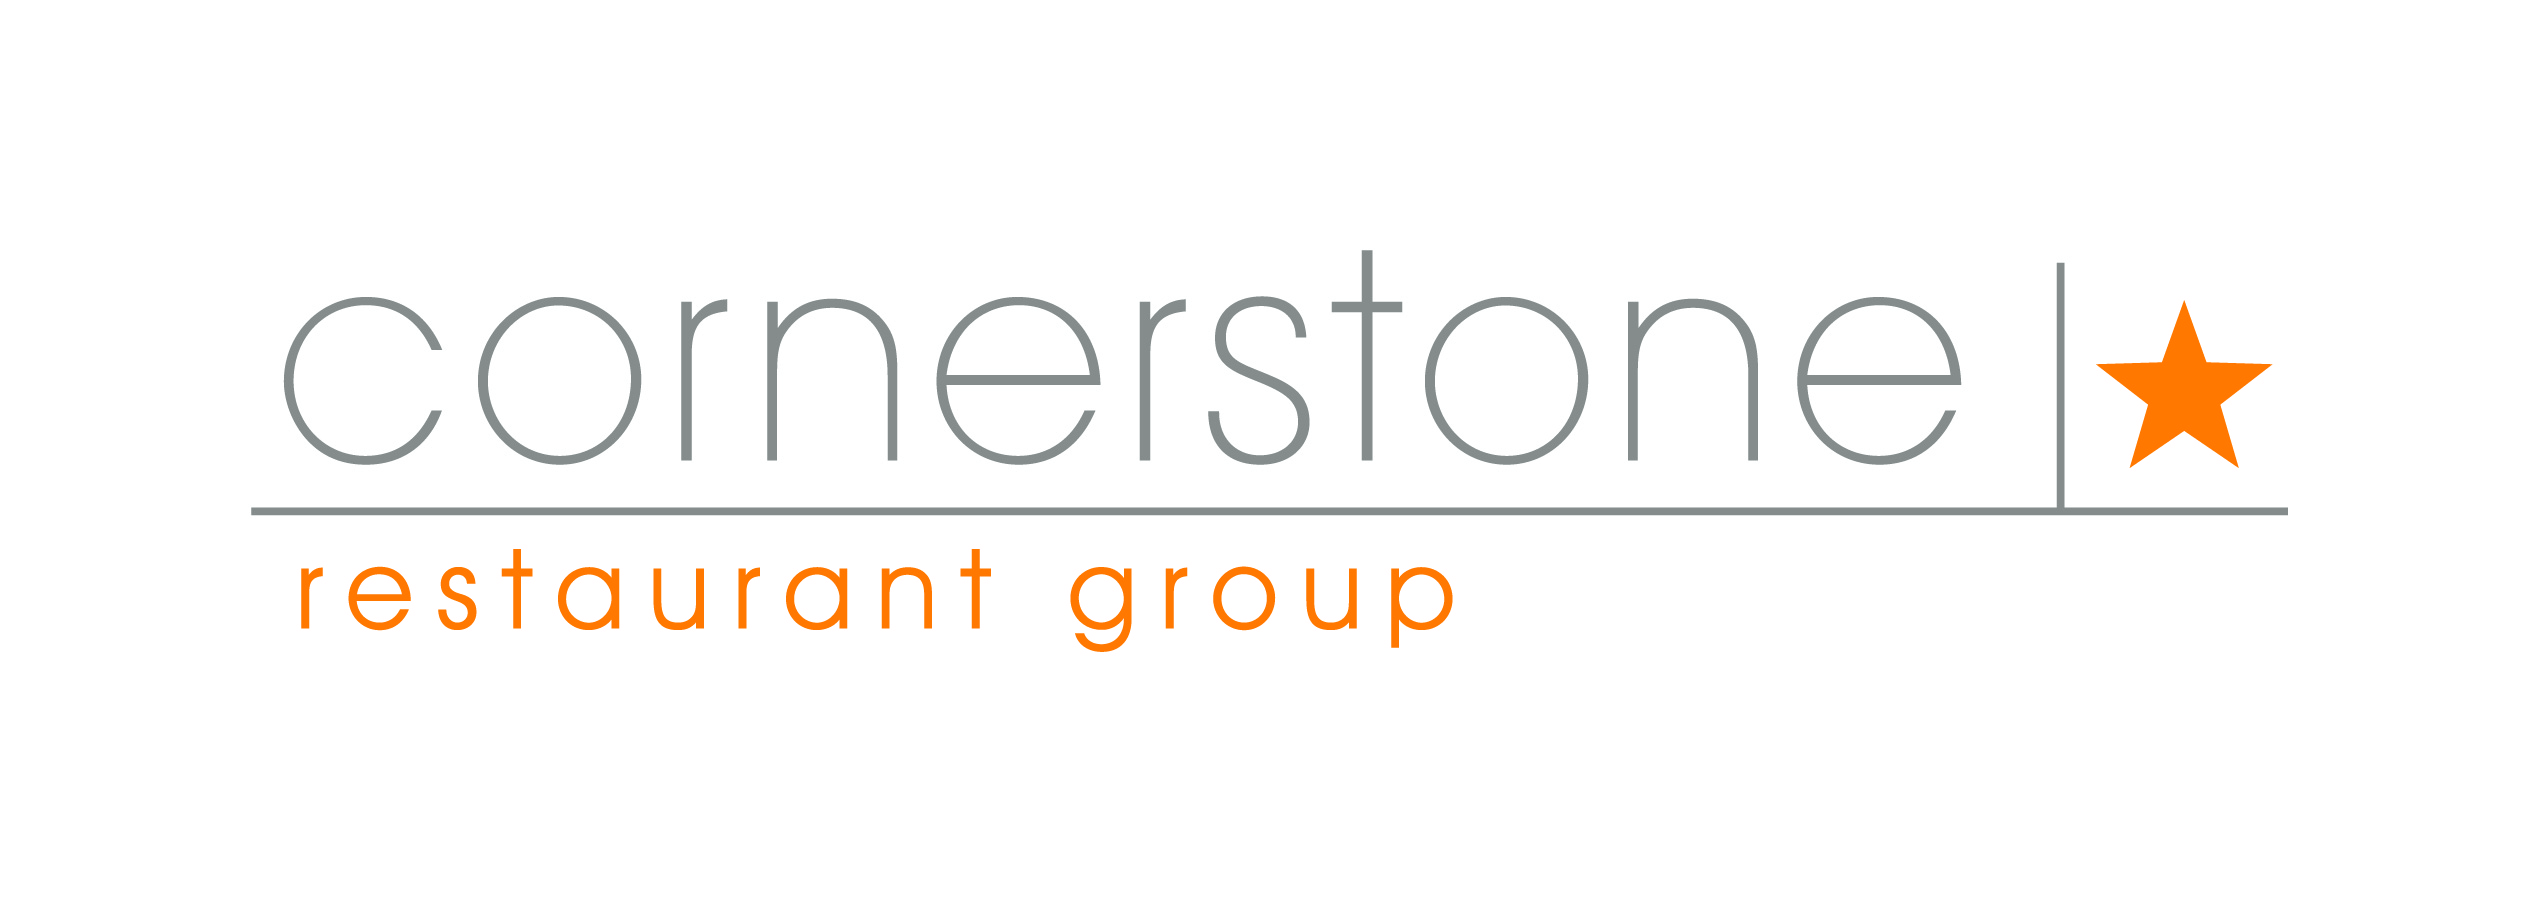 Cornerstone Restaurant Group Logo